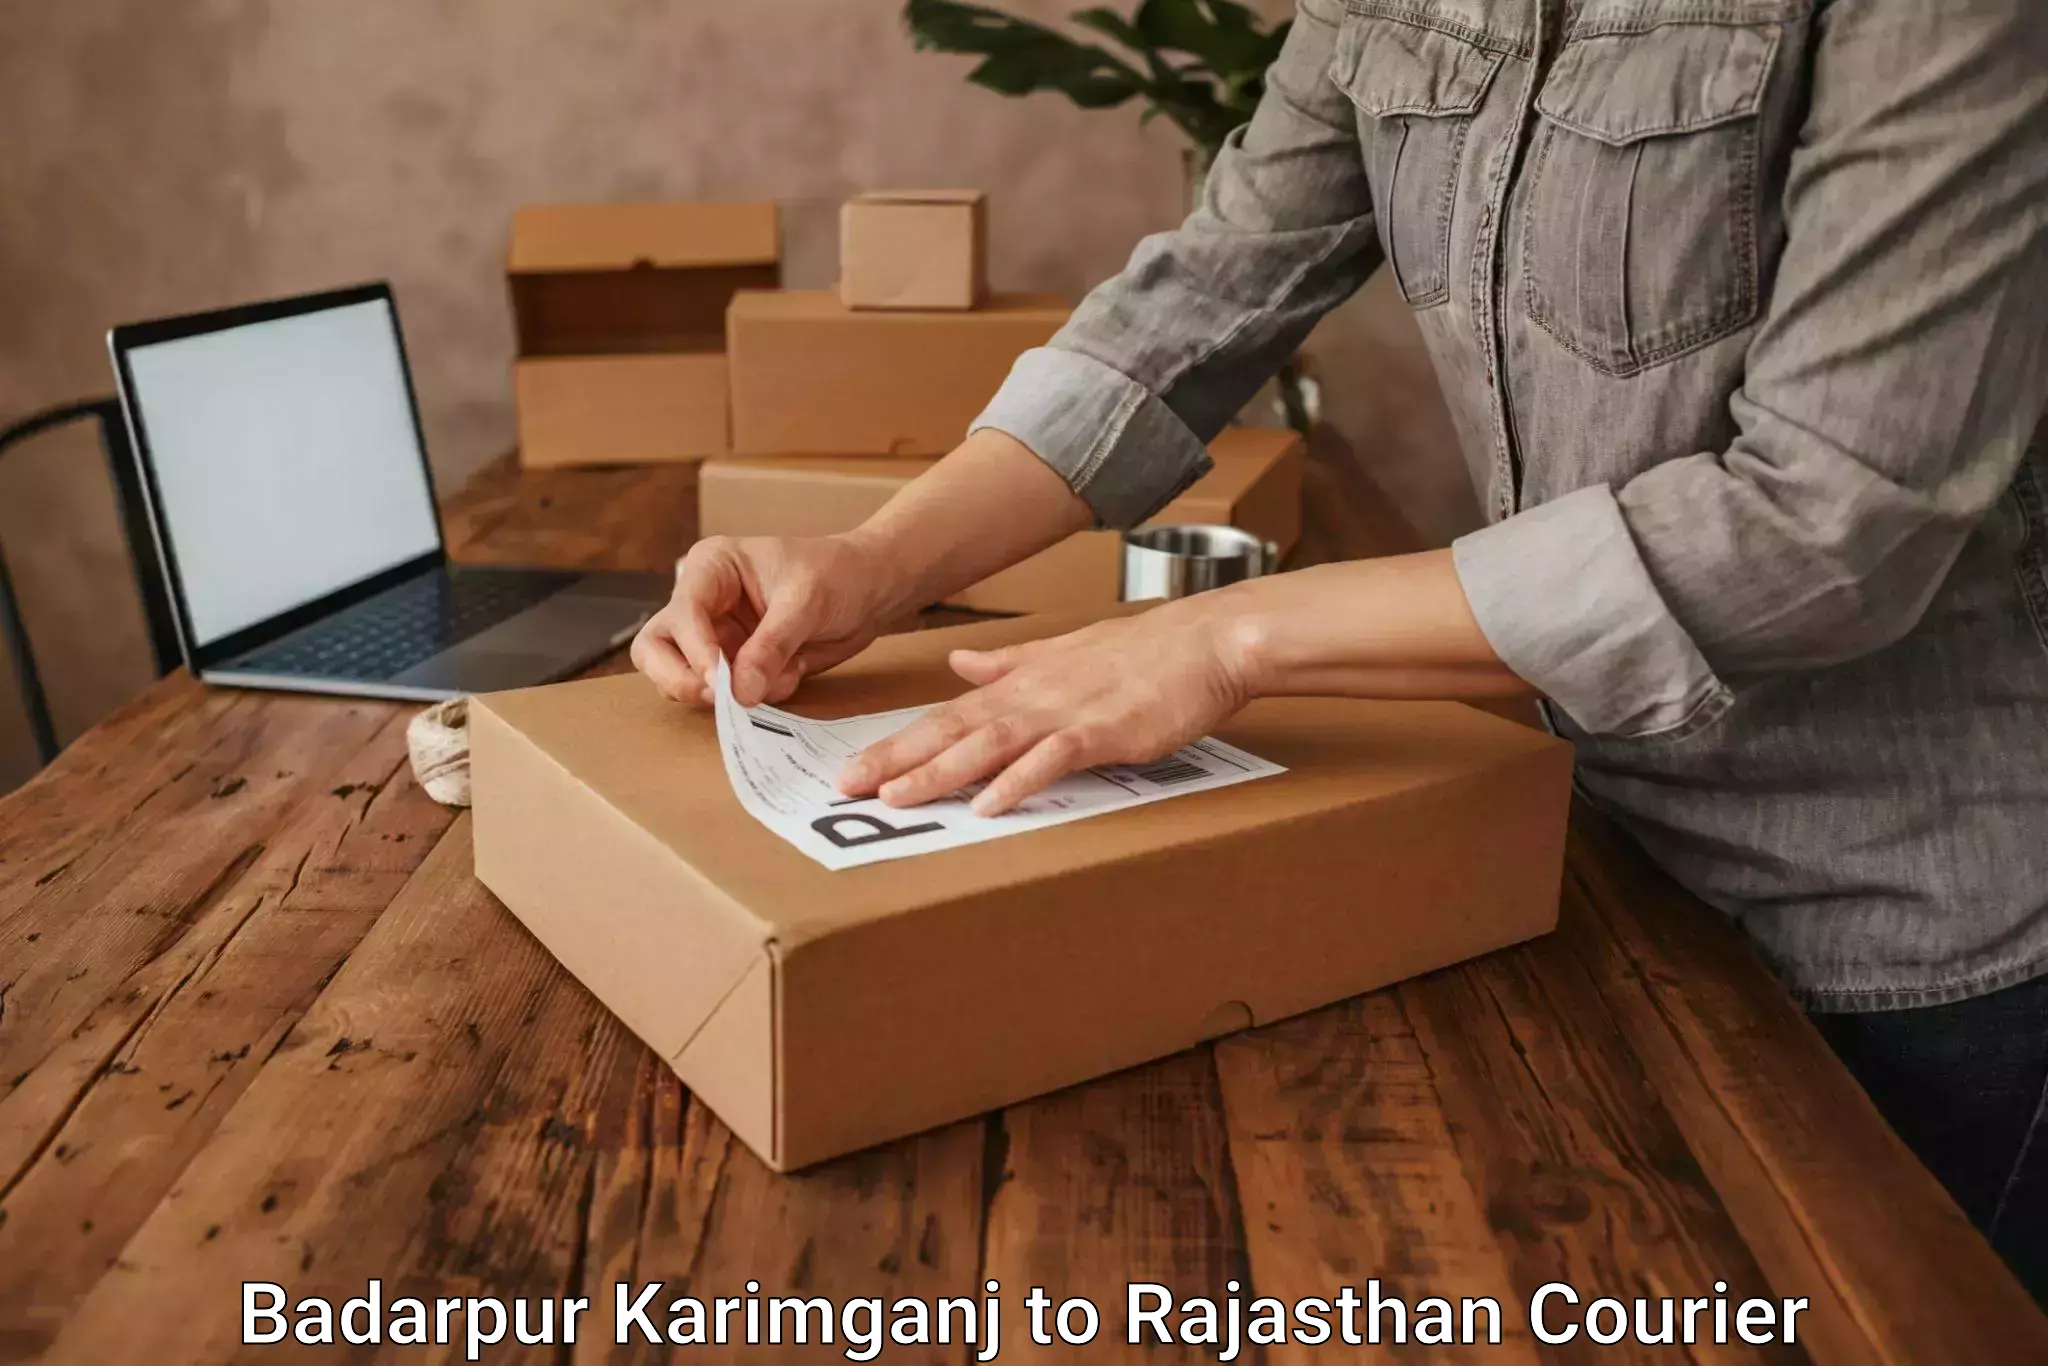 Speedy delivery service Badarpur Karimganj to Mathania